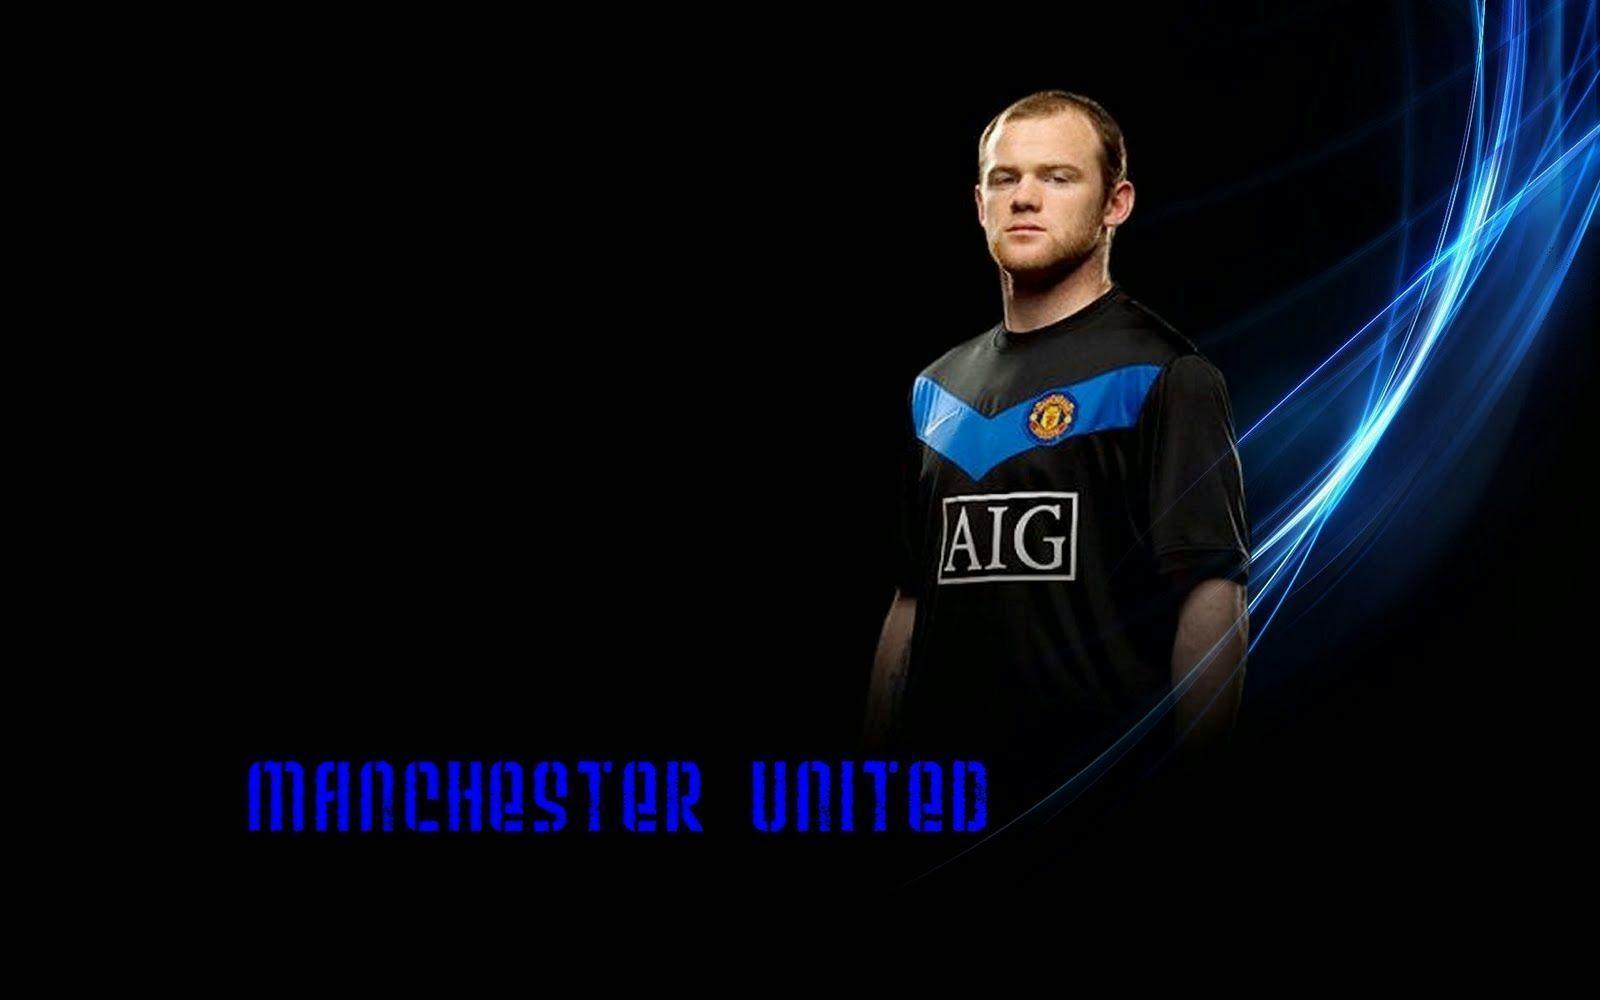 Wallpaper HD Corner: Wayne Rooney Manchester United HD Wallpaper